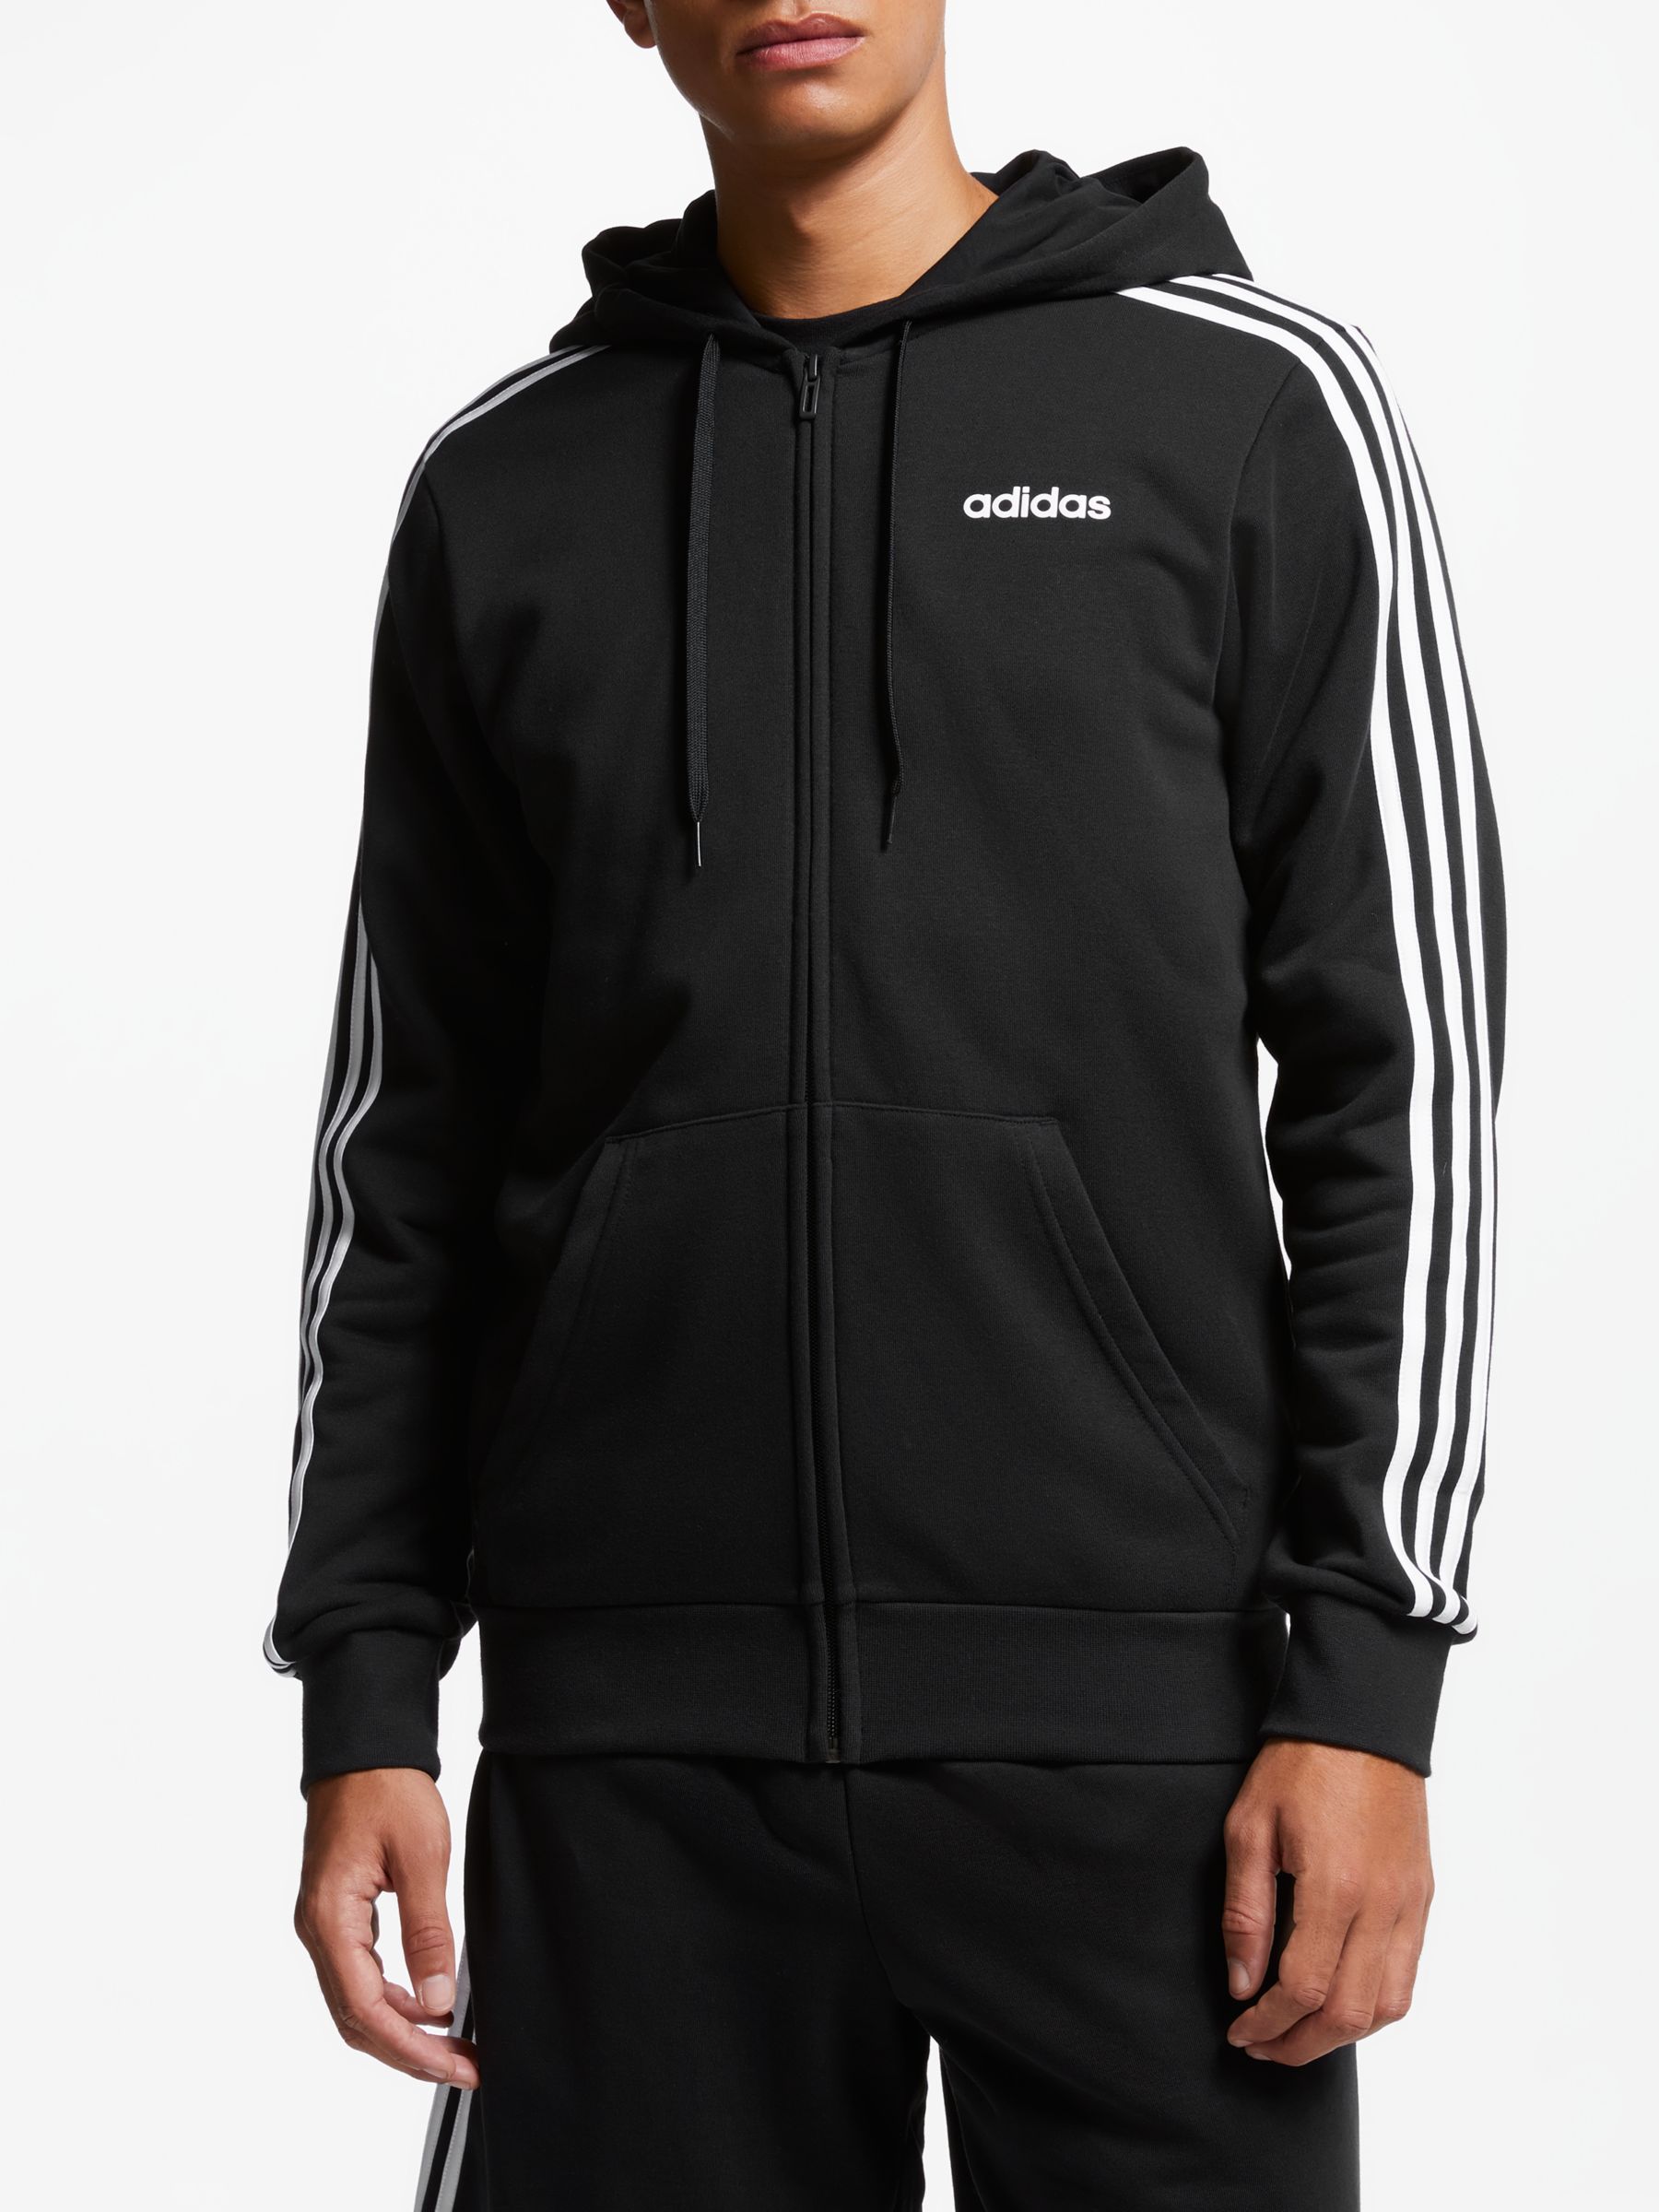 adidas 3 stripes hoodie black